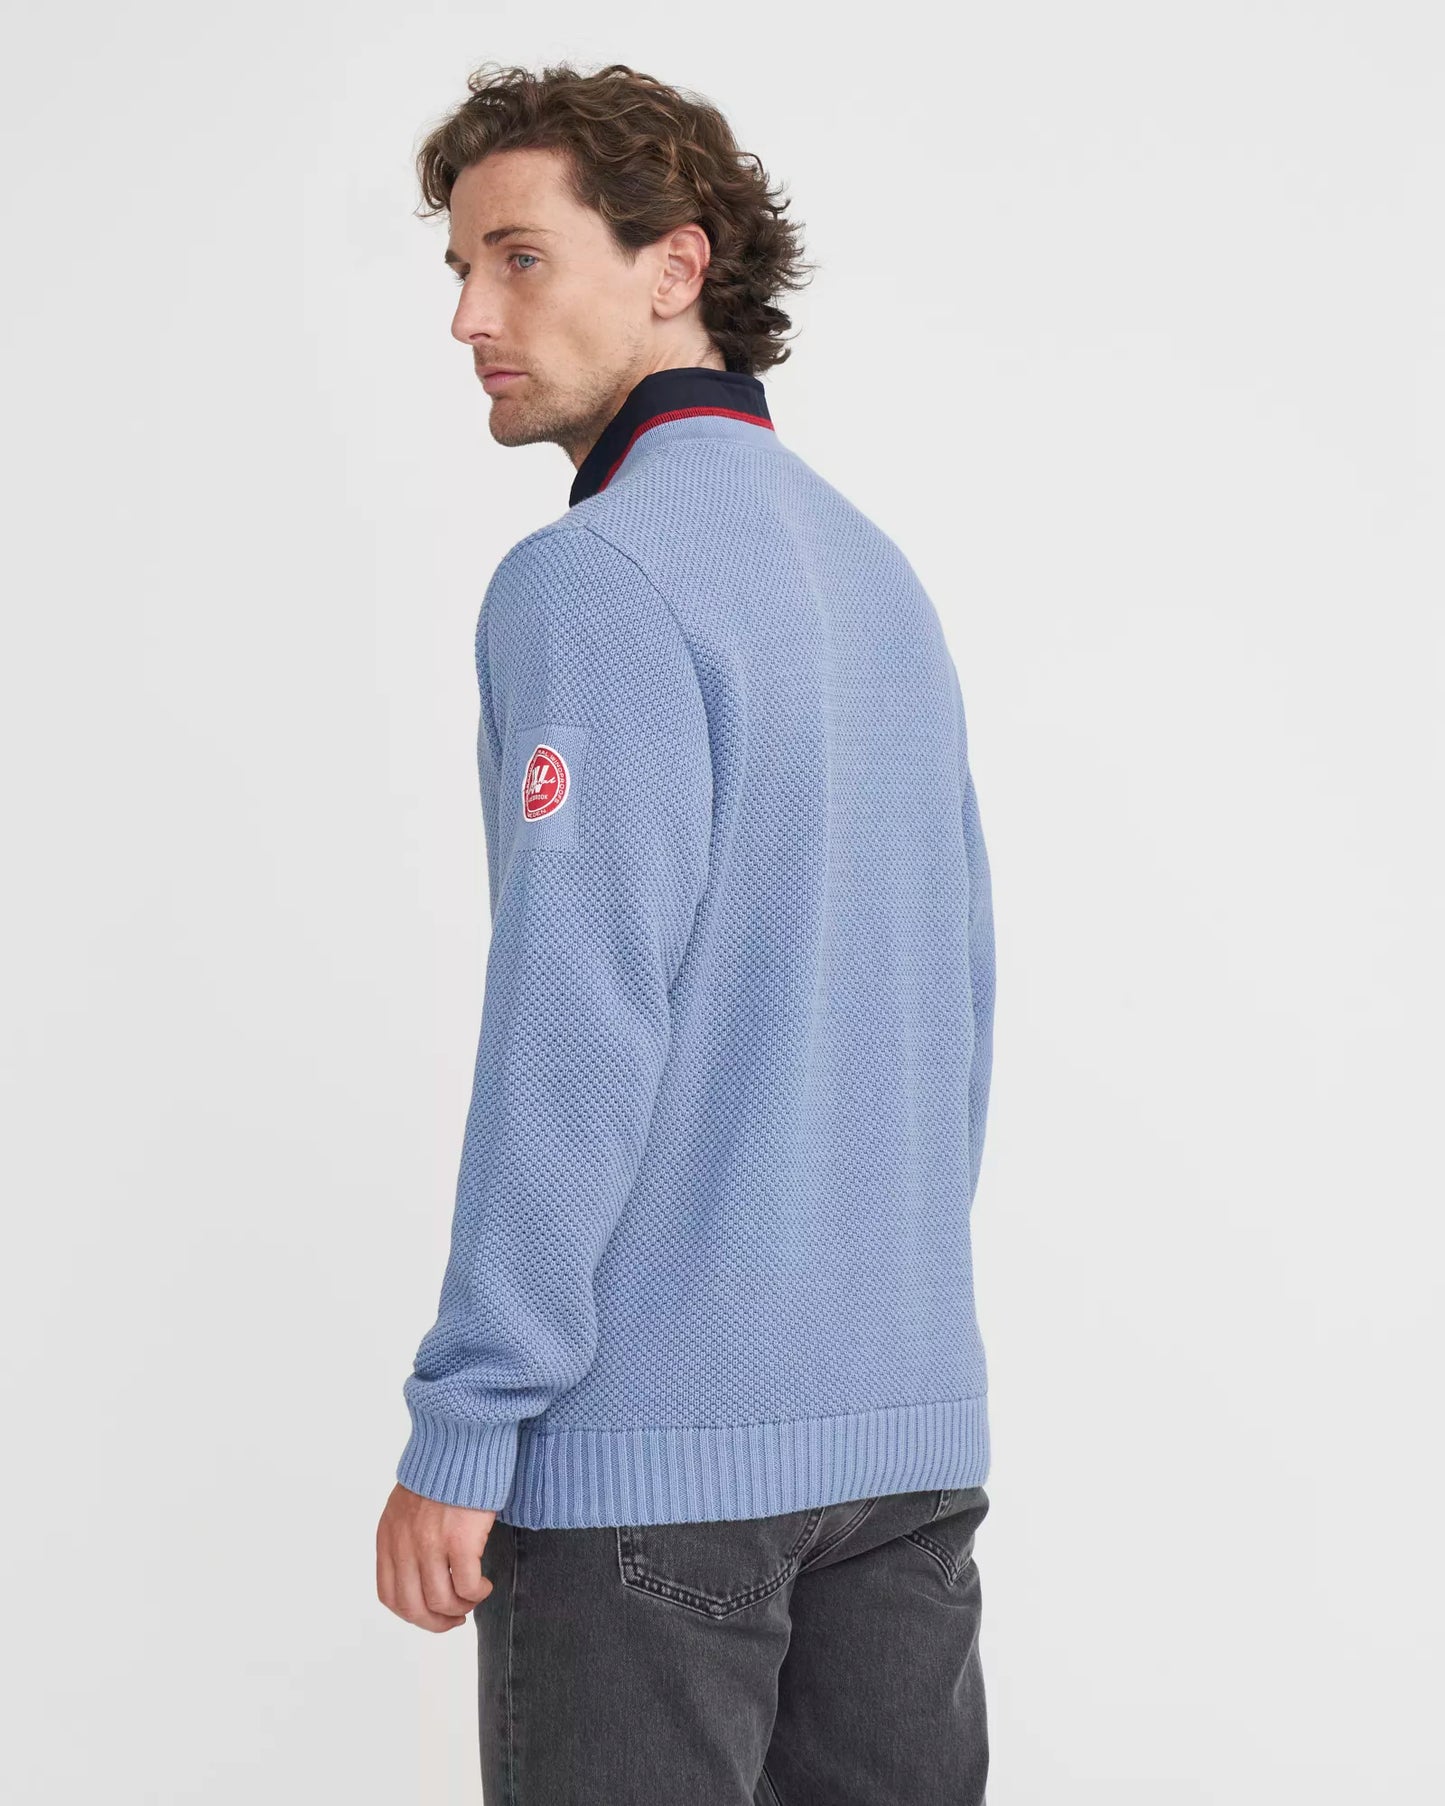 Classic Windproof Knitted Sweater - Stonewash